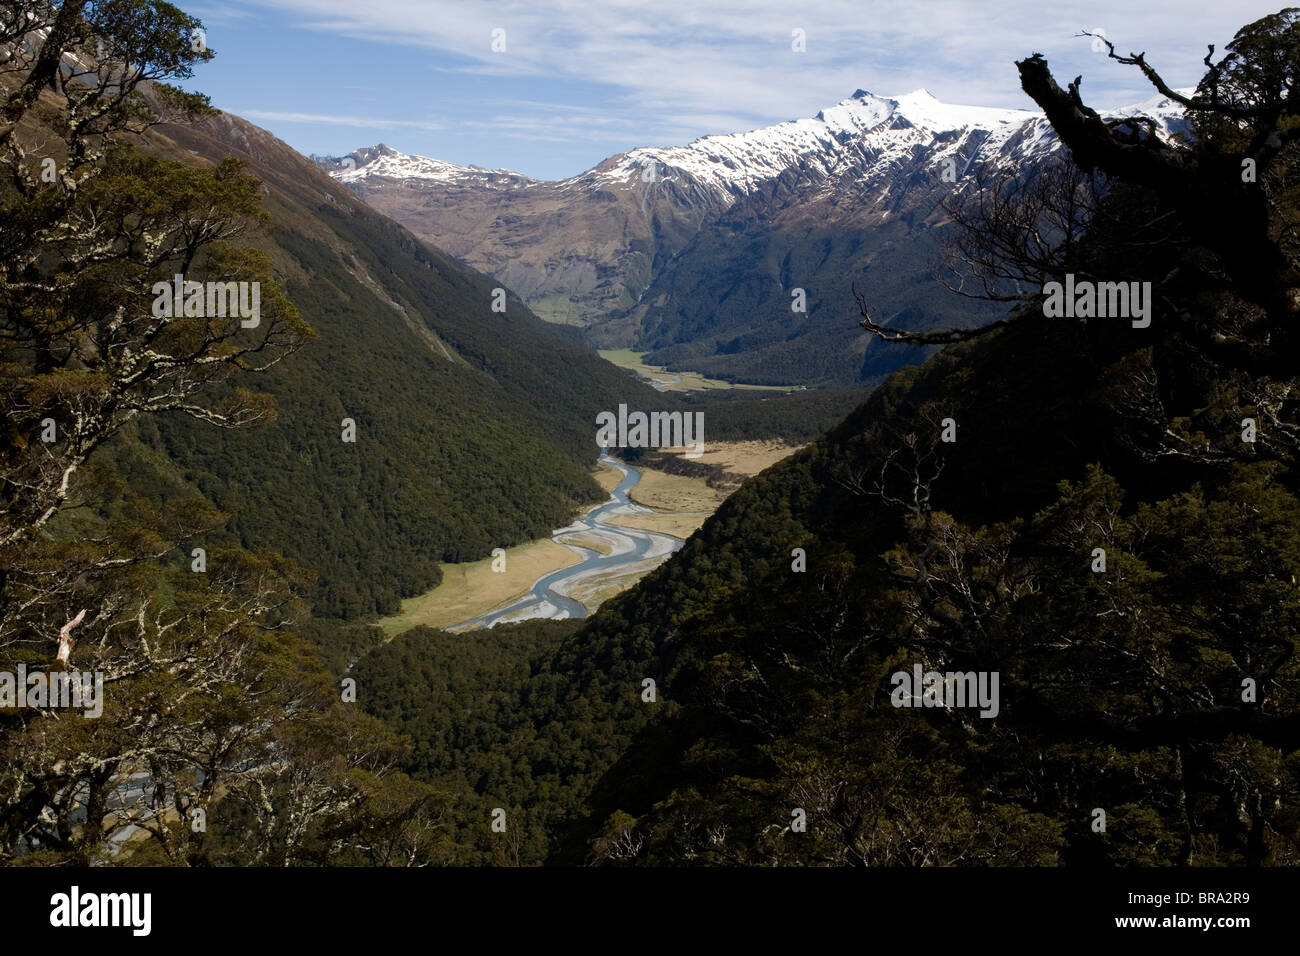 The Matukituki River Valley, West Branch, Mount Aspiring National Park, New Zealand. Stock Photo